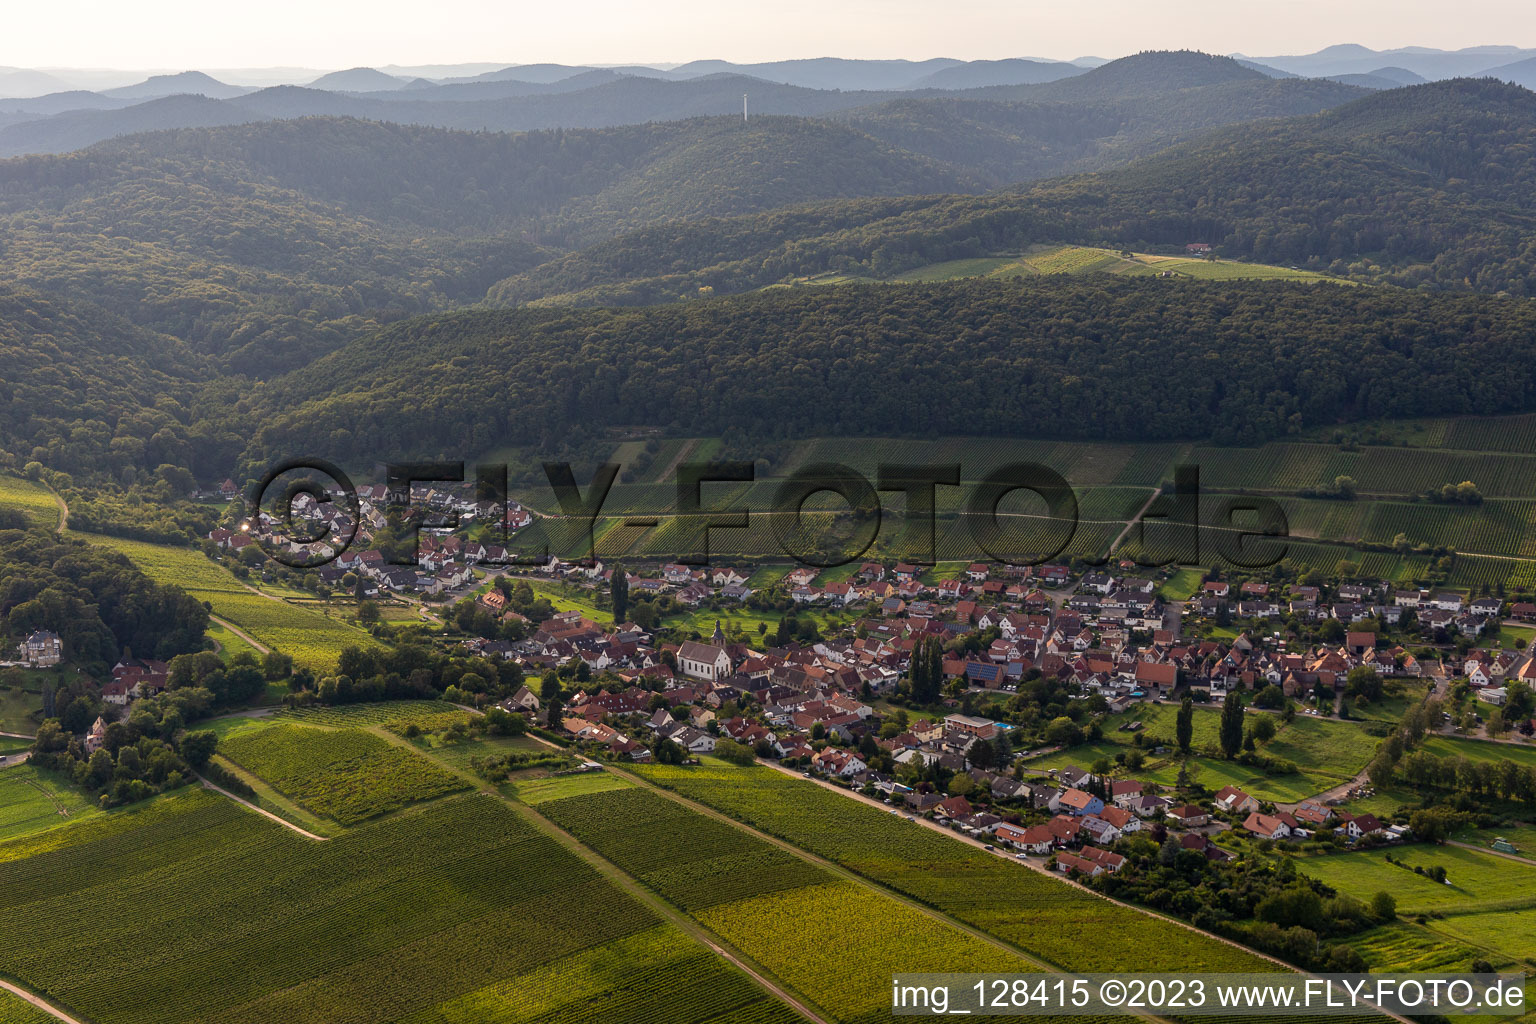 Bird's eye view of District Pleisweiler in Pleisweiler-Oberhofen in the state Rhineland-Palatinate, Germany